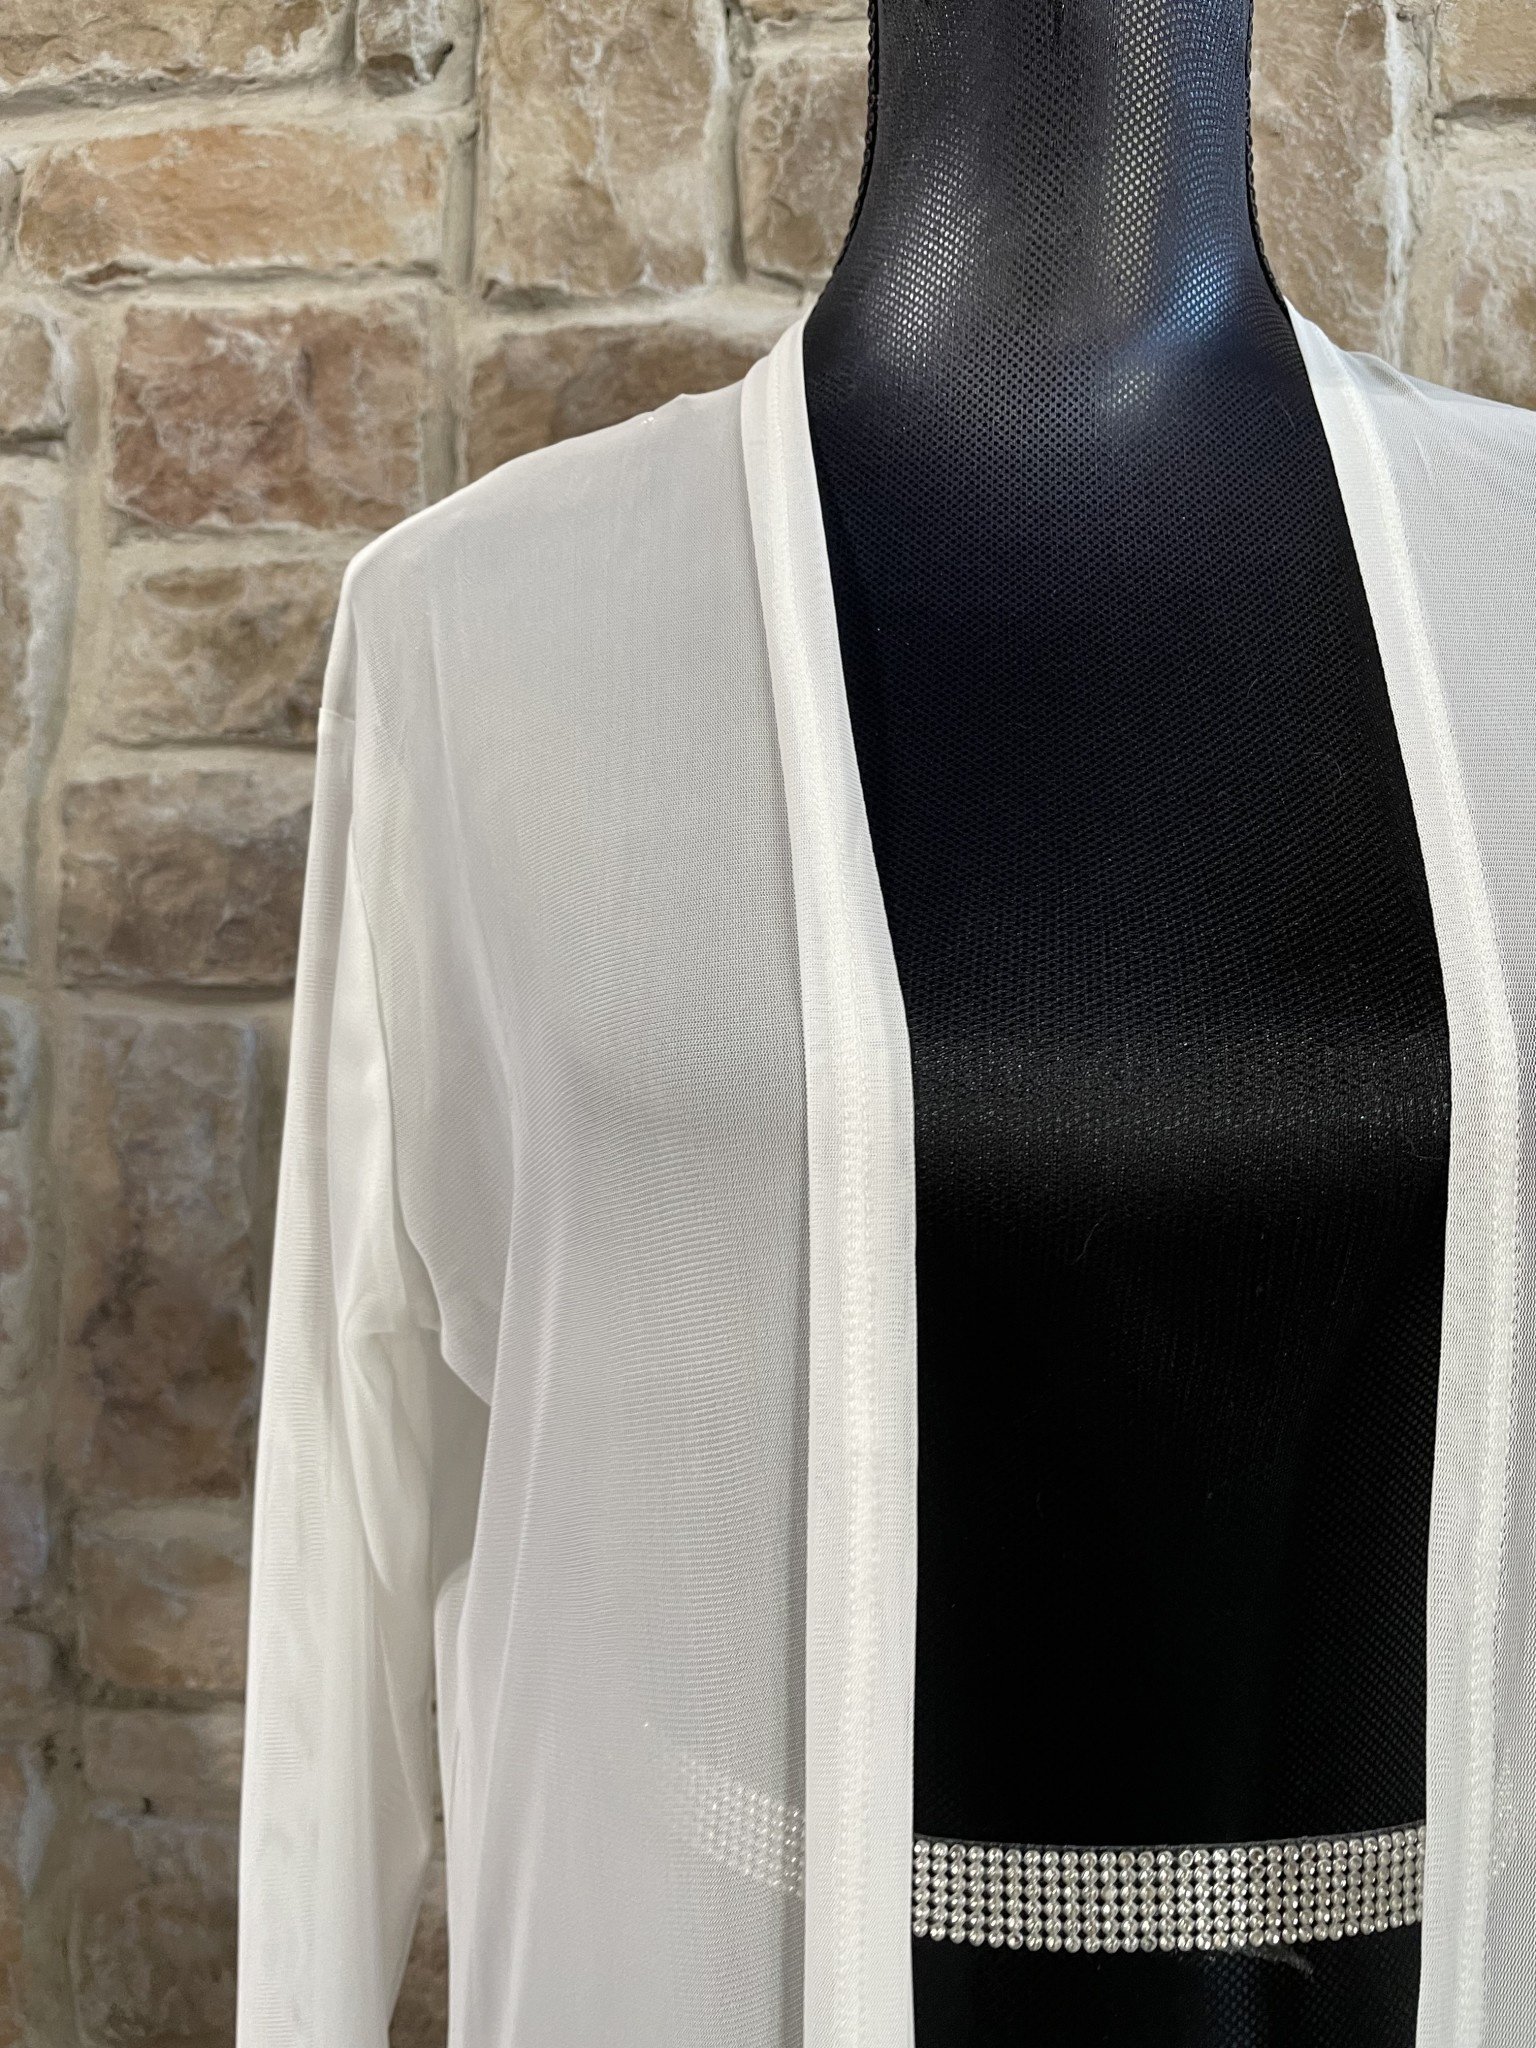 Zenana Outfitters Size Medium M Gray Open Front Knit Long Sleeve Cardigan  EUC